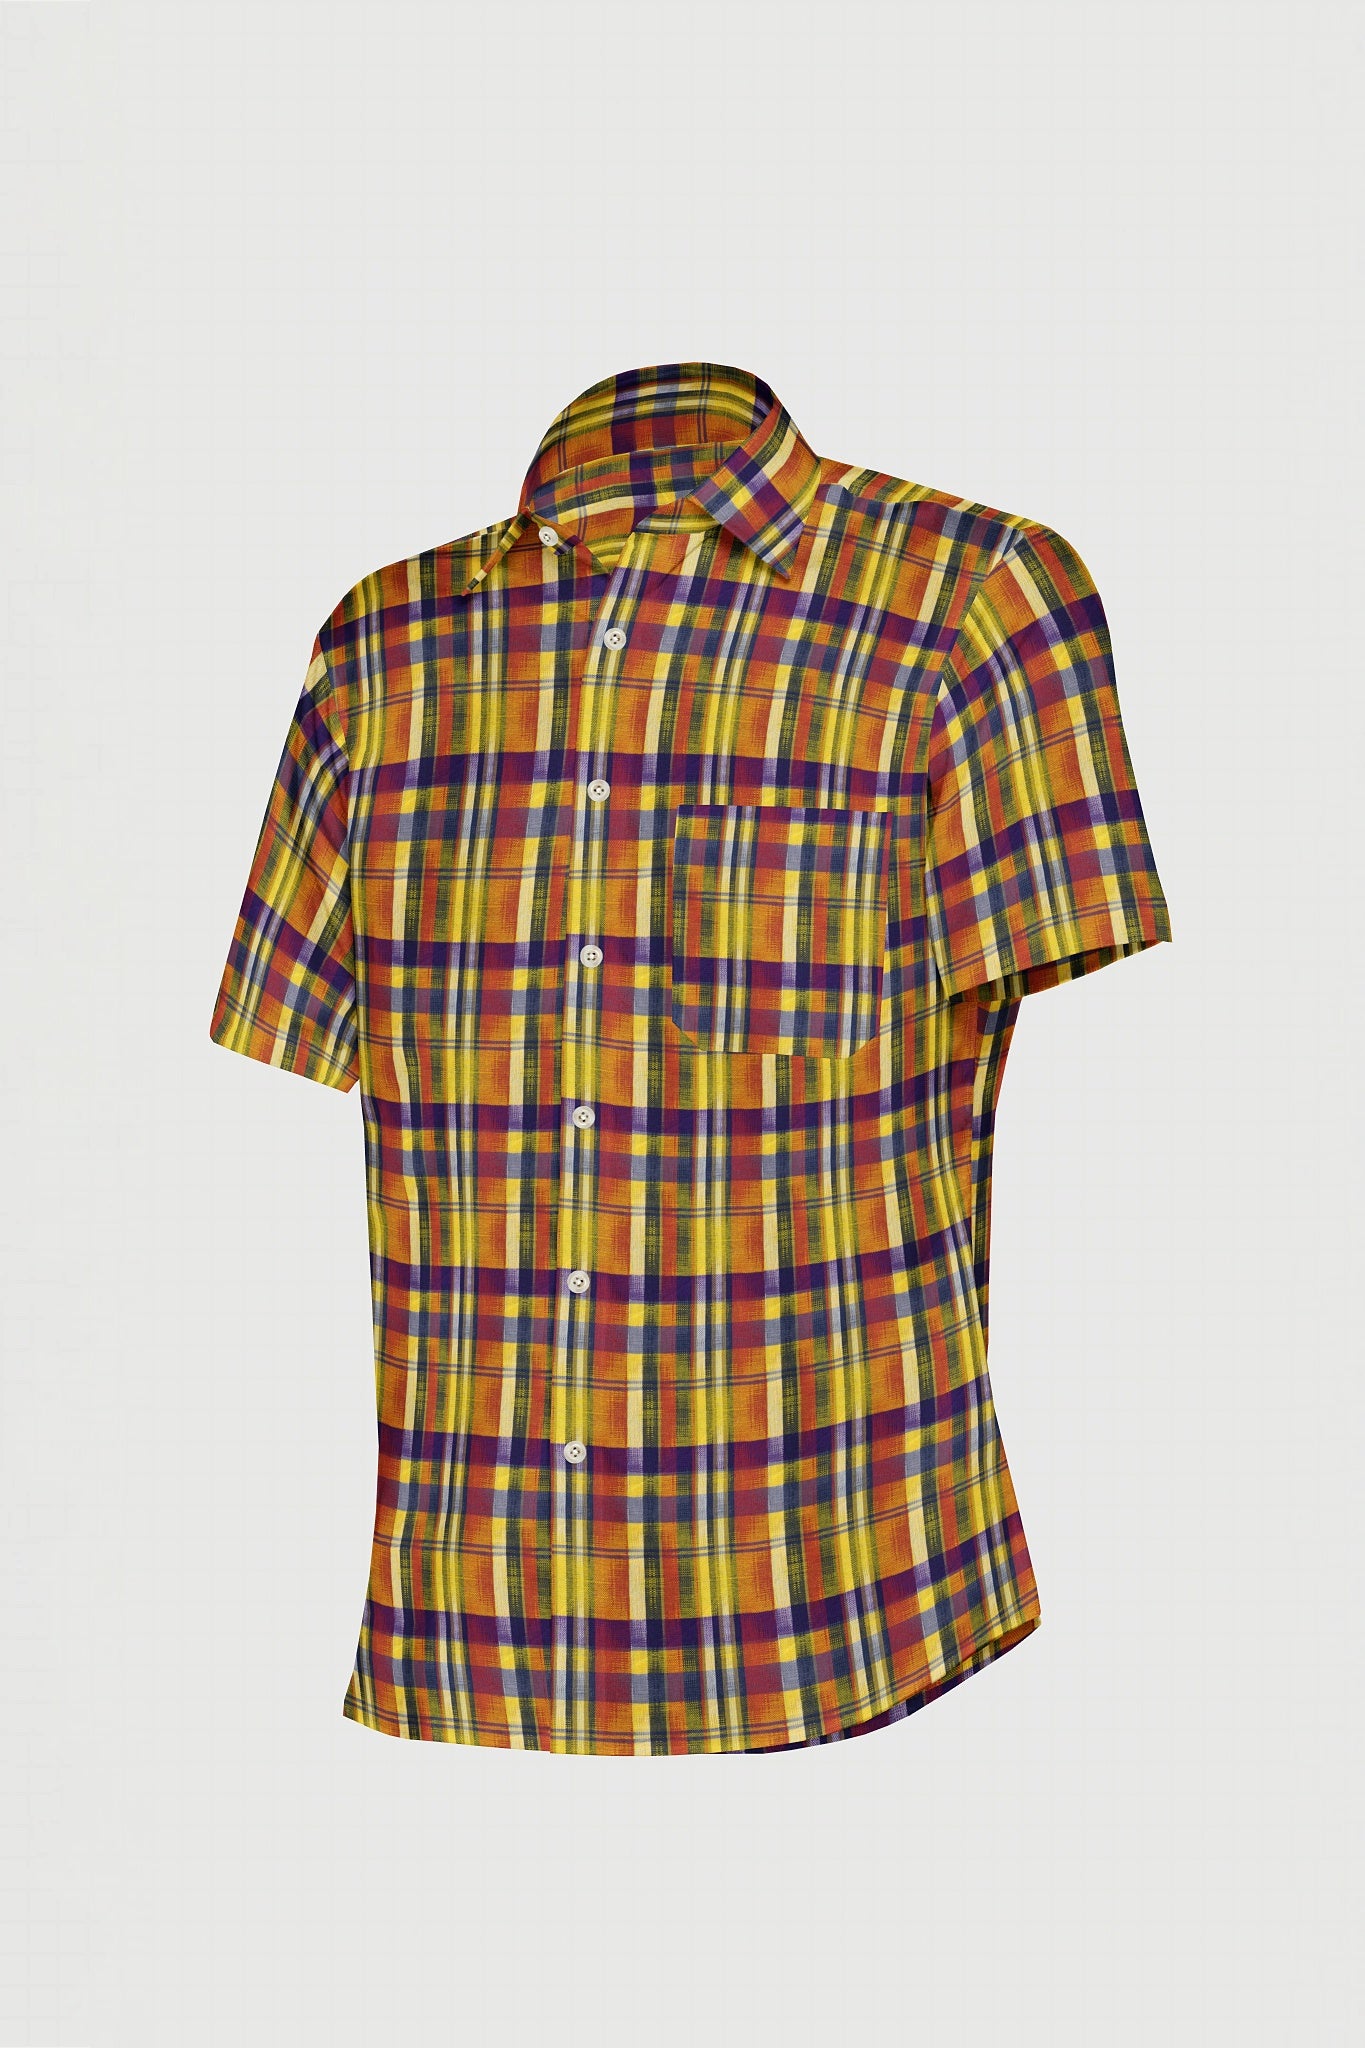 Minion Yellow and Verbena Purple Multicolored Checked Cotton Shirt